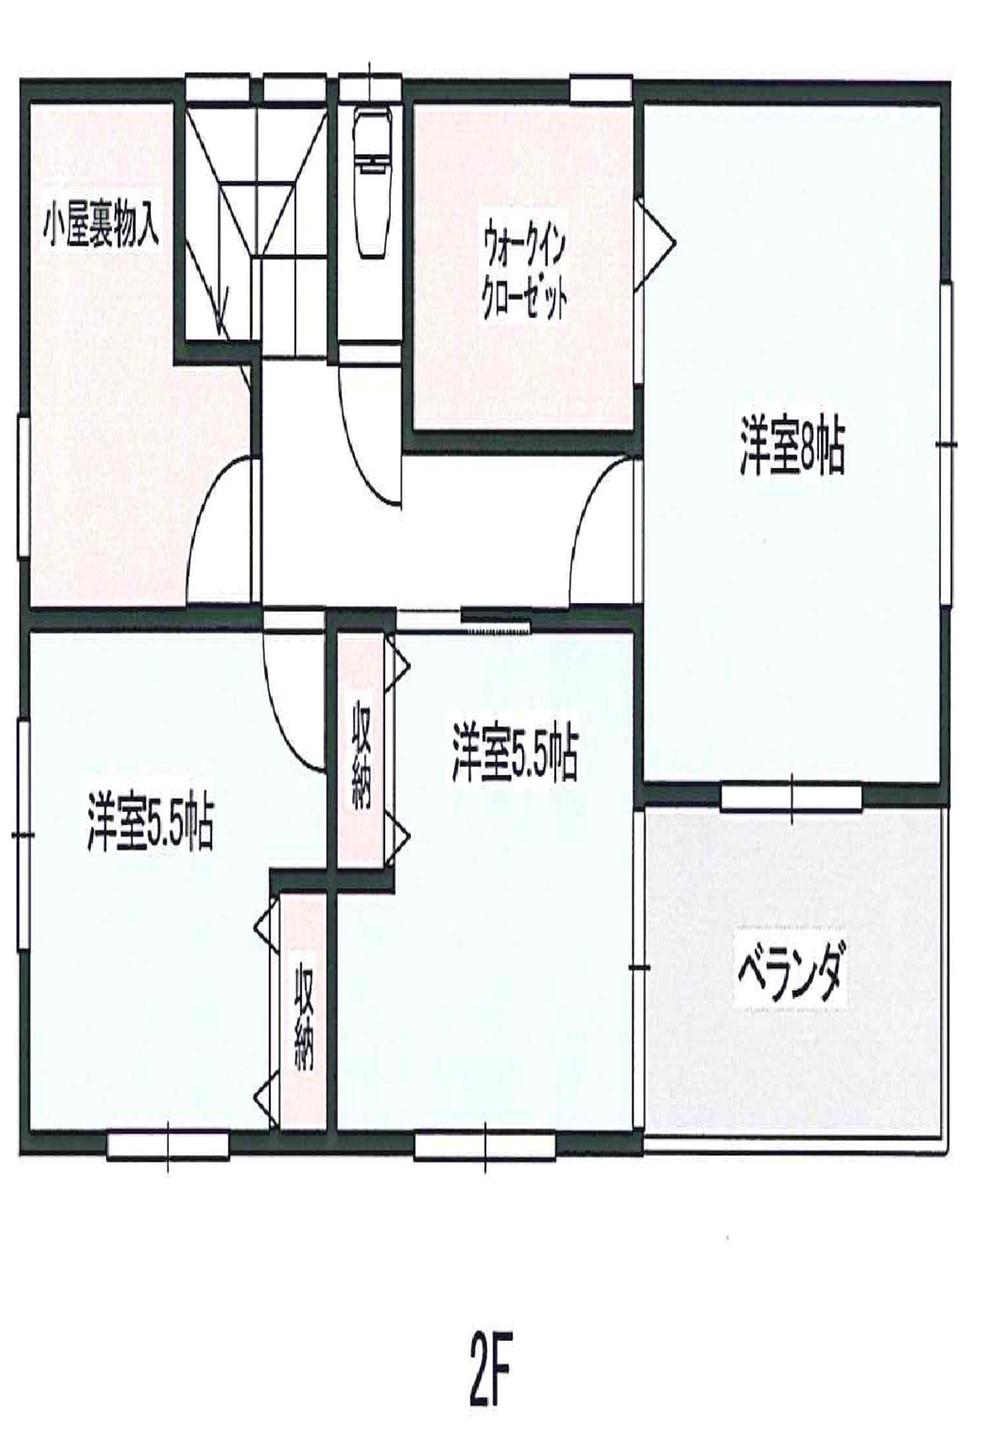 Floor plan. 24,300,000 yen, 4LDK + S (storeroom), Land area 175.12 sq m , Building area 106.4 sq m 2F (8 Hiroshi ・ 5.5 Hiroshi ・ 5.5 Hiroshi ・ Walk-in closet ・ 3.75 attic storage)